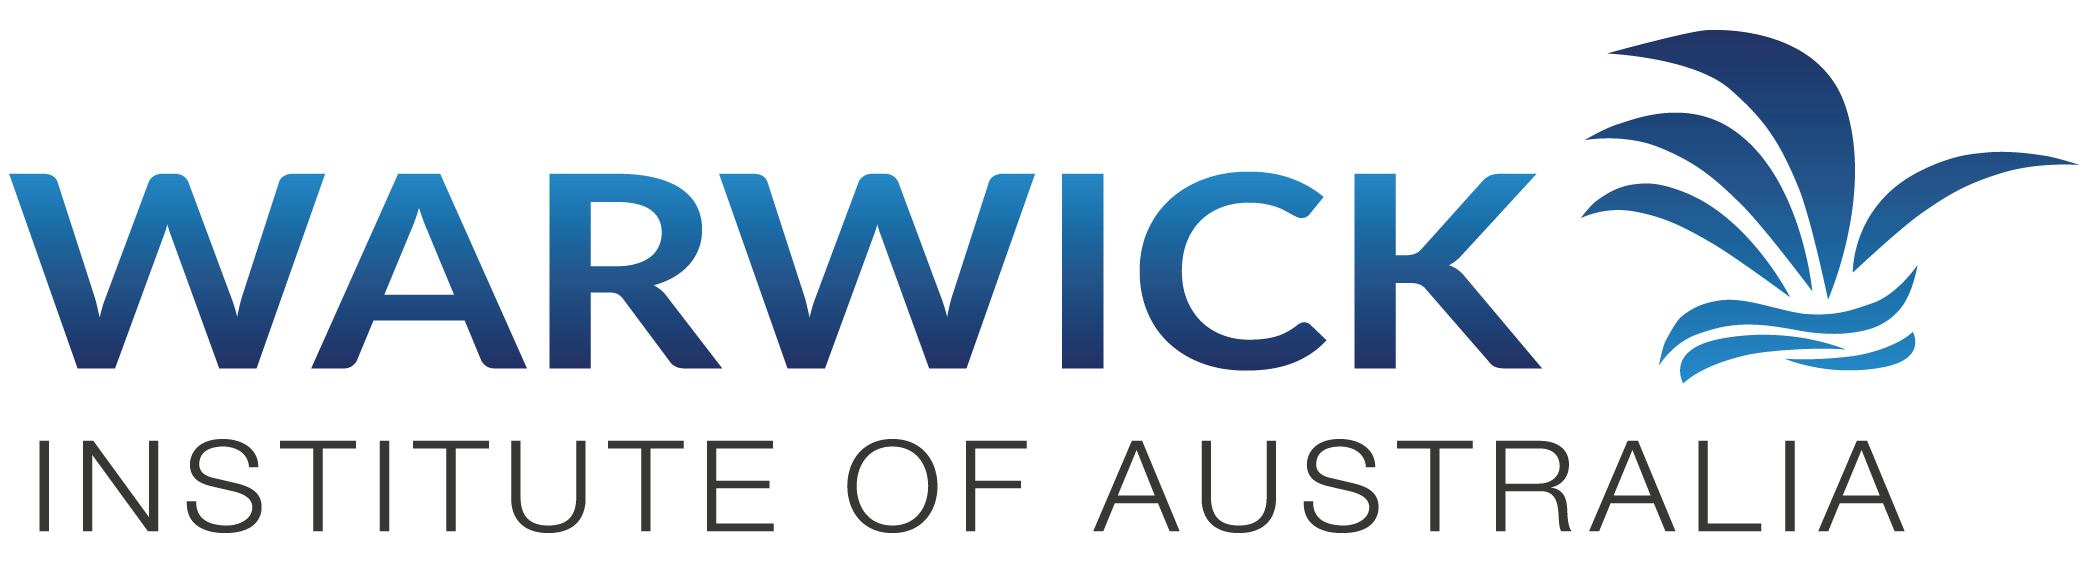 Warwick Institute of Australia